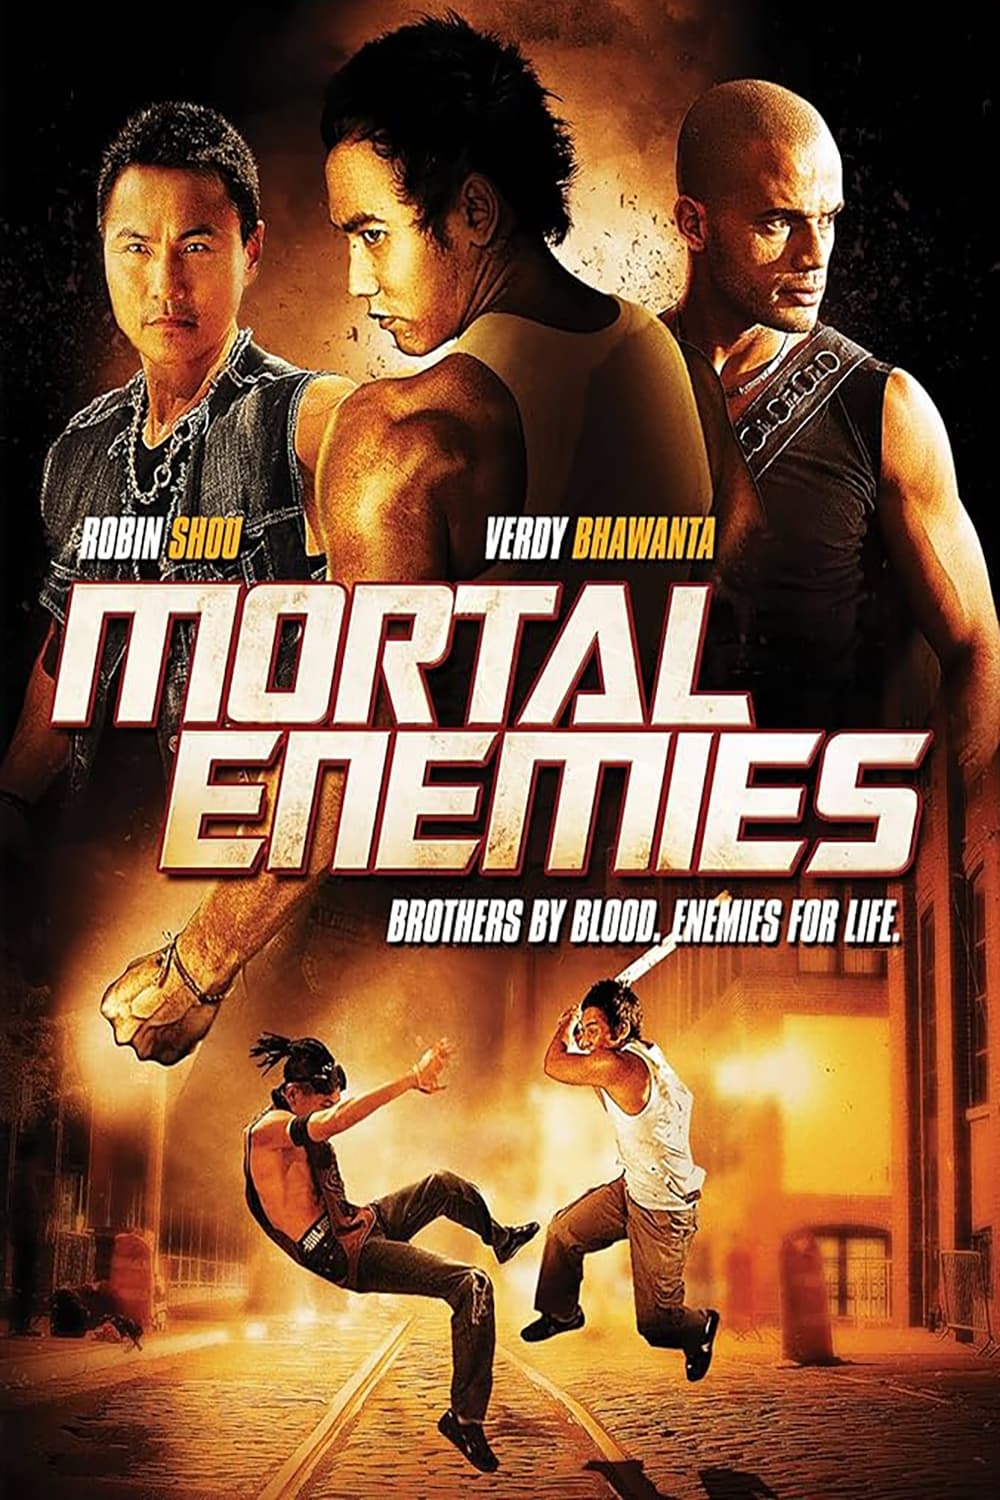 Mortal Enemies (2011)